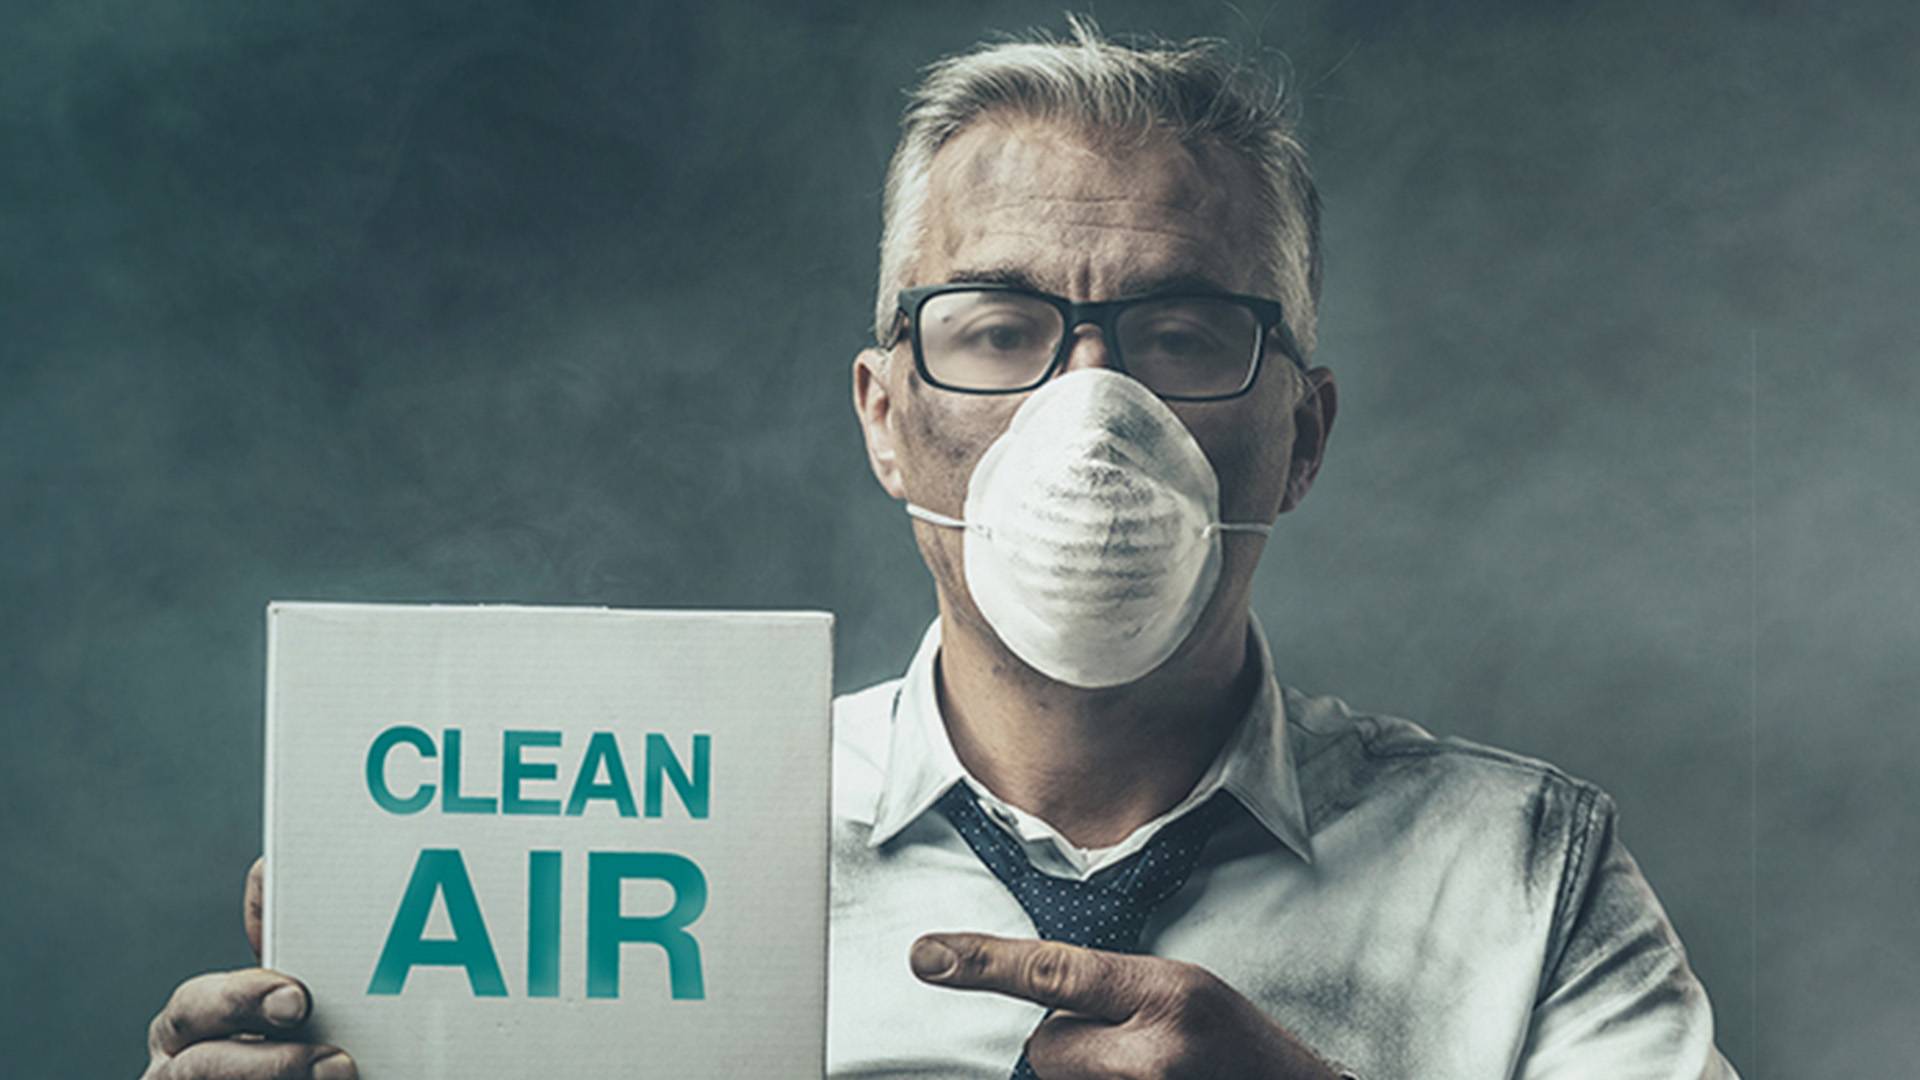 dust formation air pollution health risk